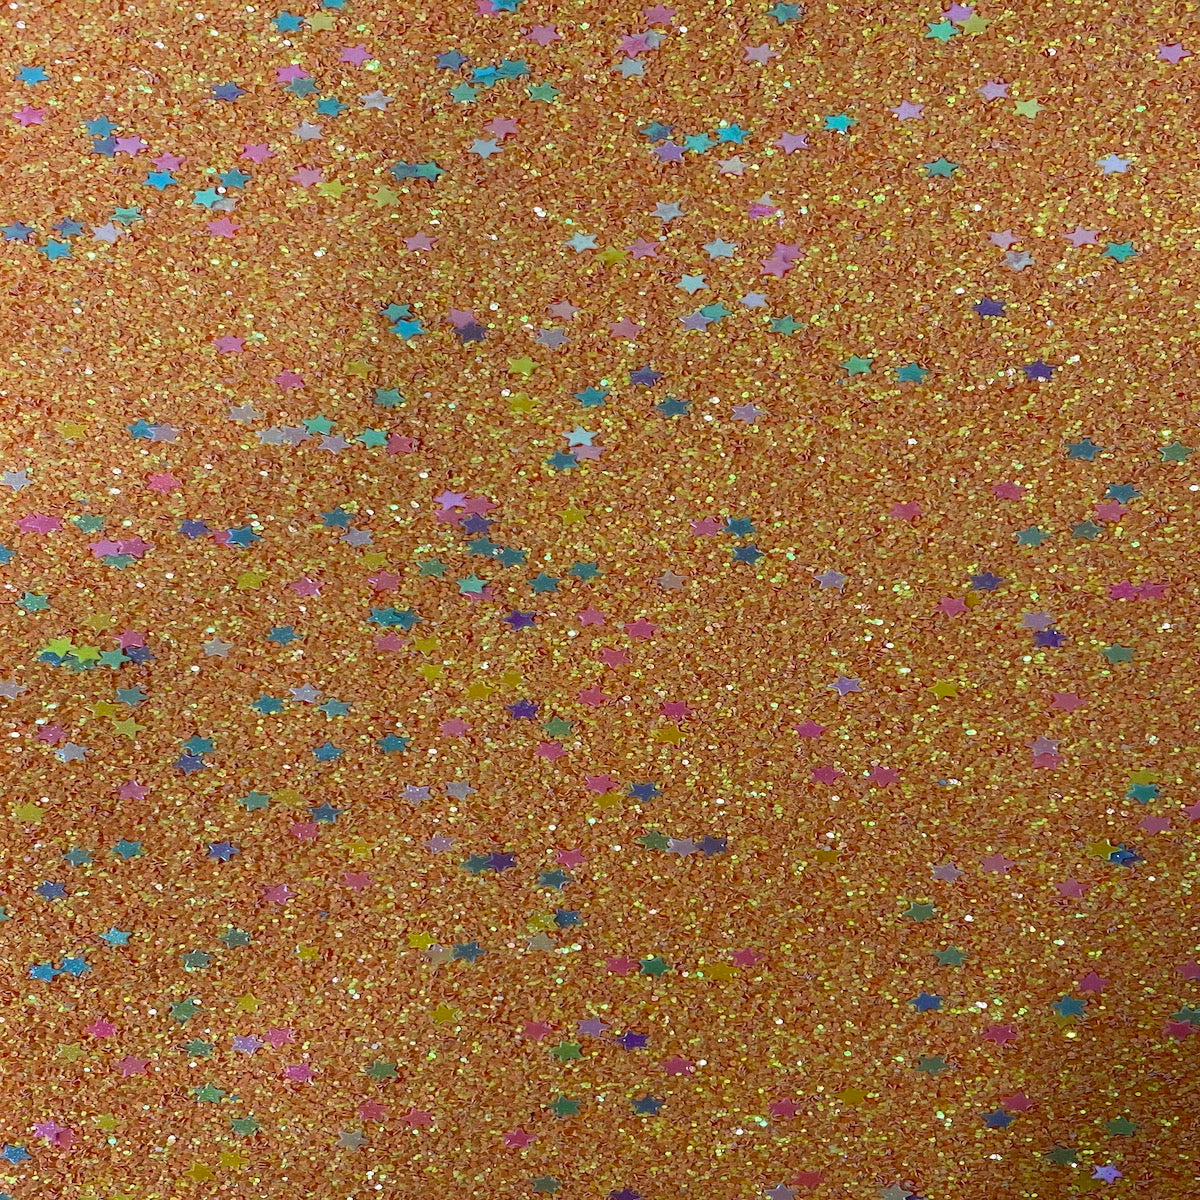 Orange Iridescent Stardust Glitter Vinyl Fabric - Fashion Fabrics LLC